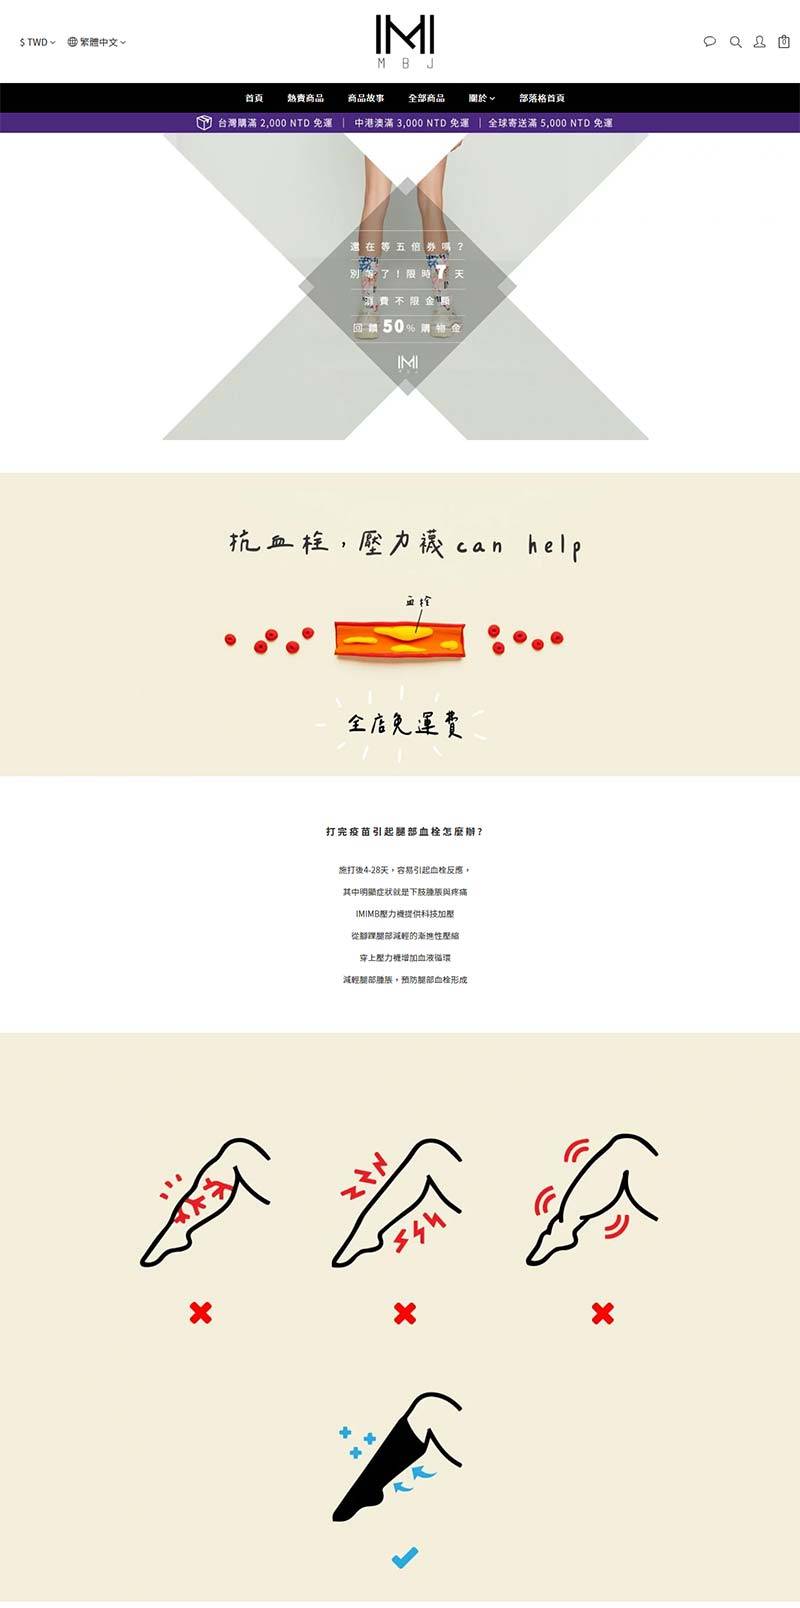 IMI MBJ 台湾时尚袜品牌购物网站